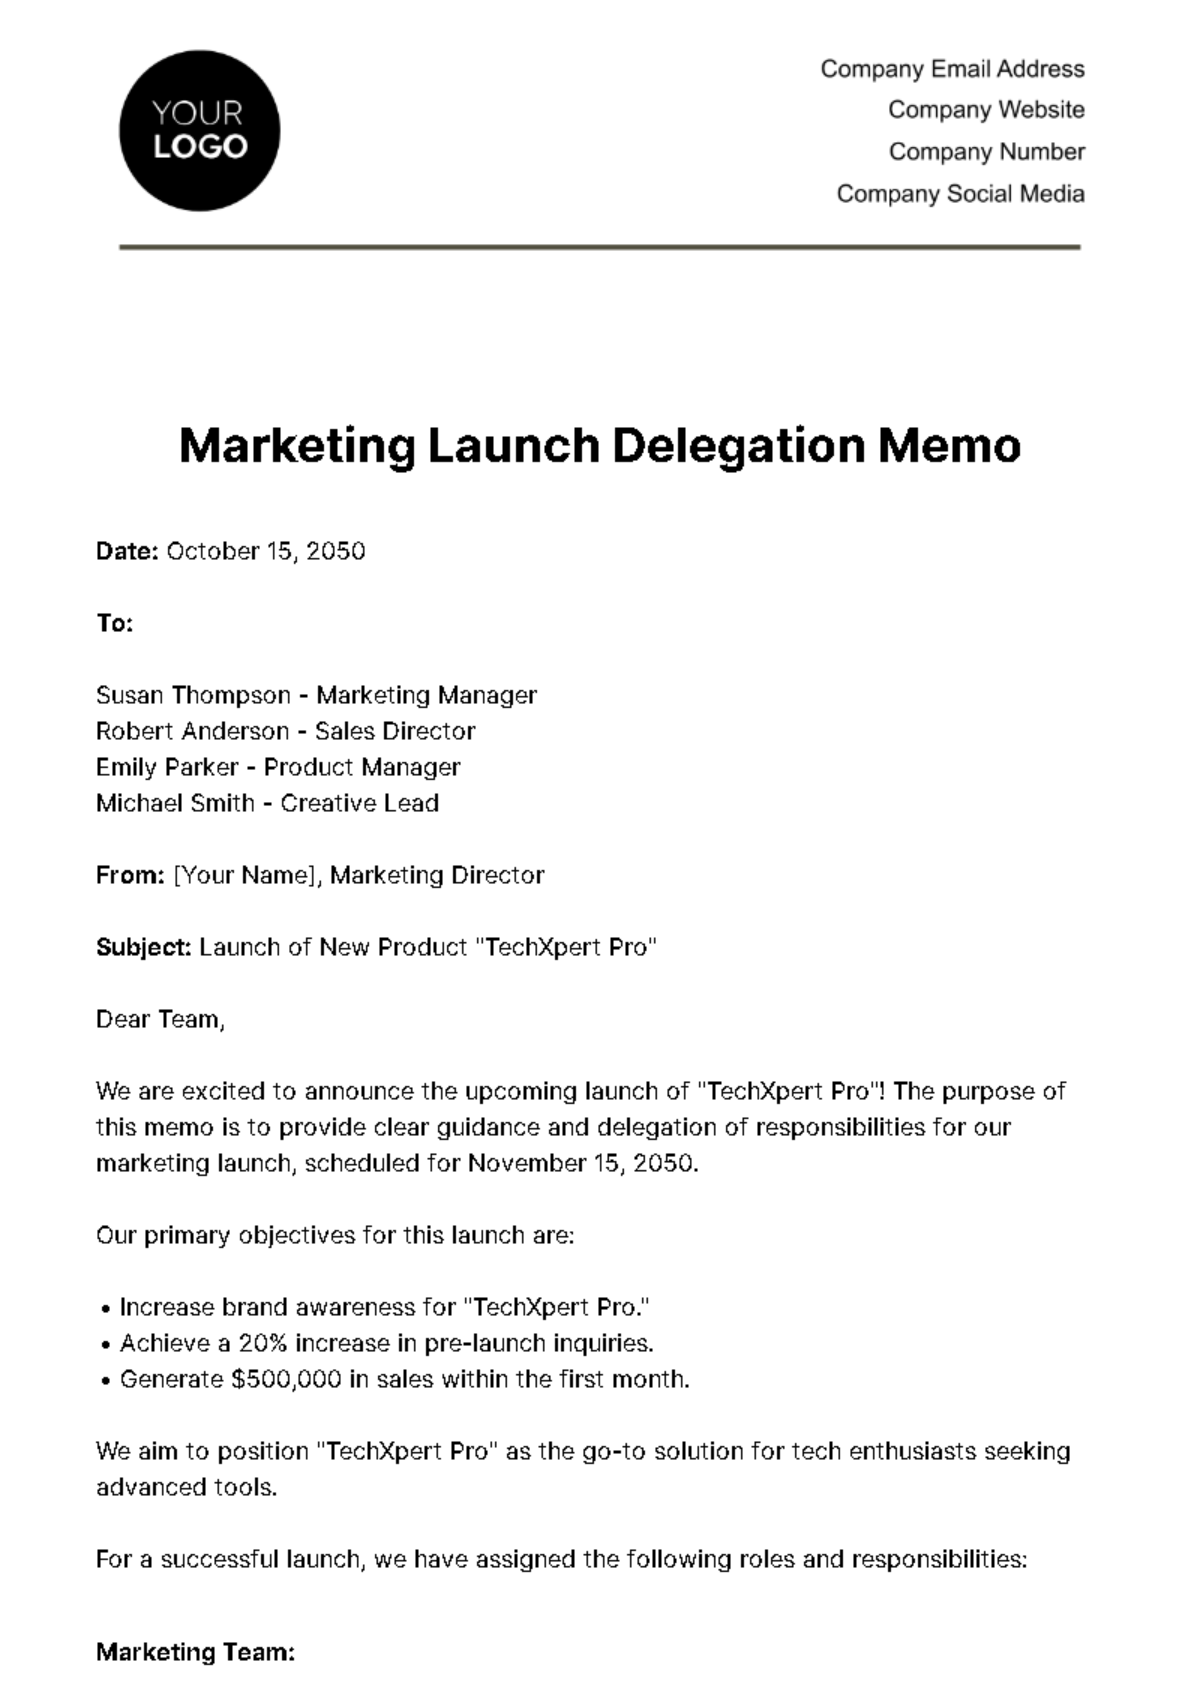 Free Marketing Launch Delegation Memo Template